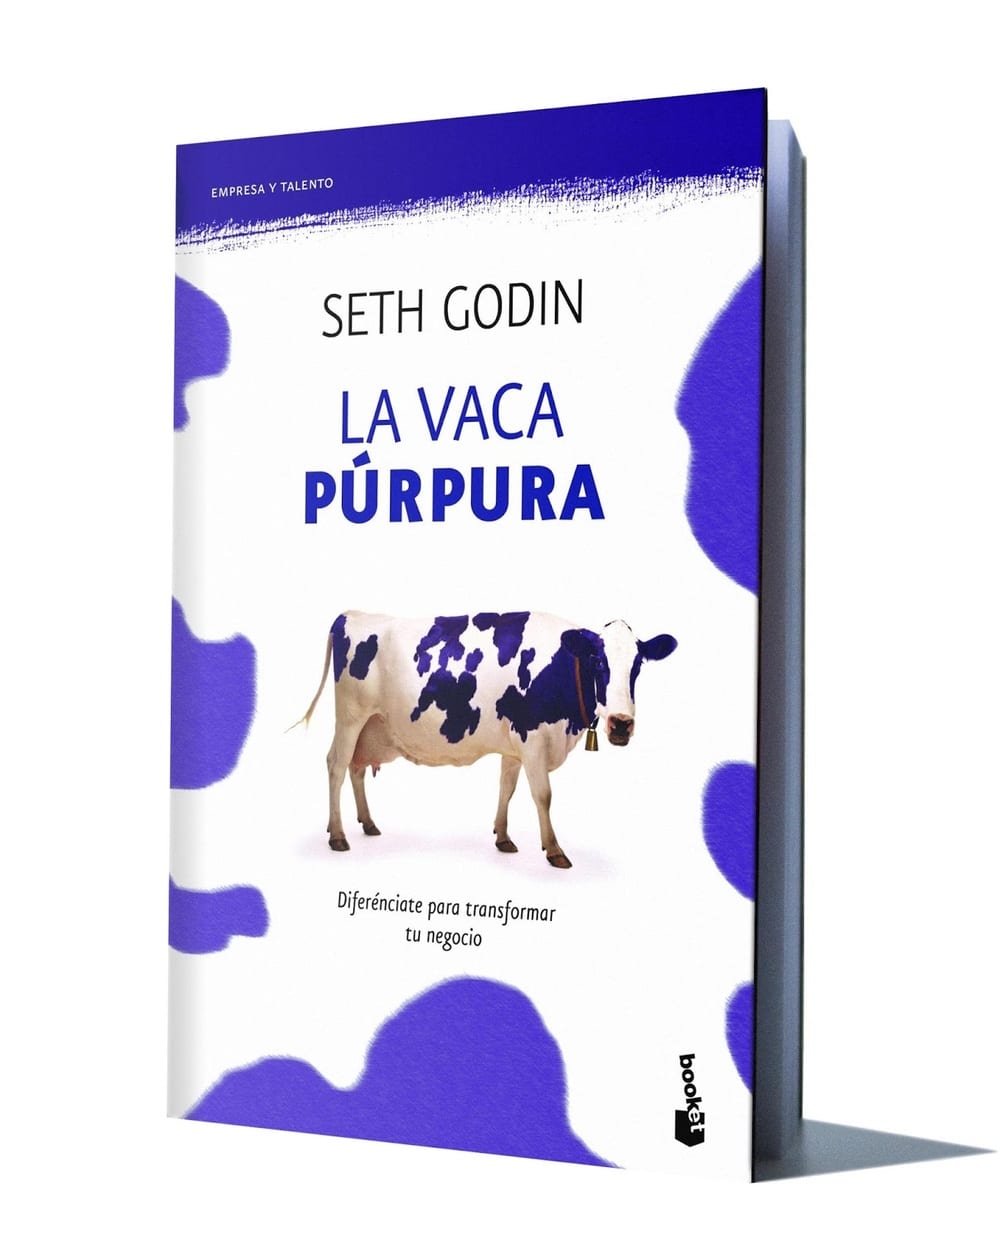 La vaca purpura de Seth Godin